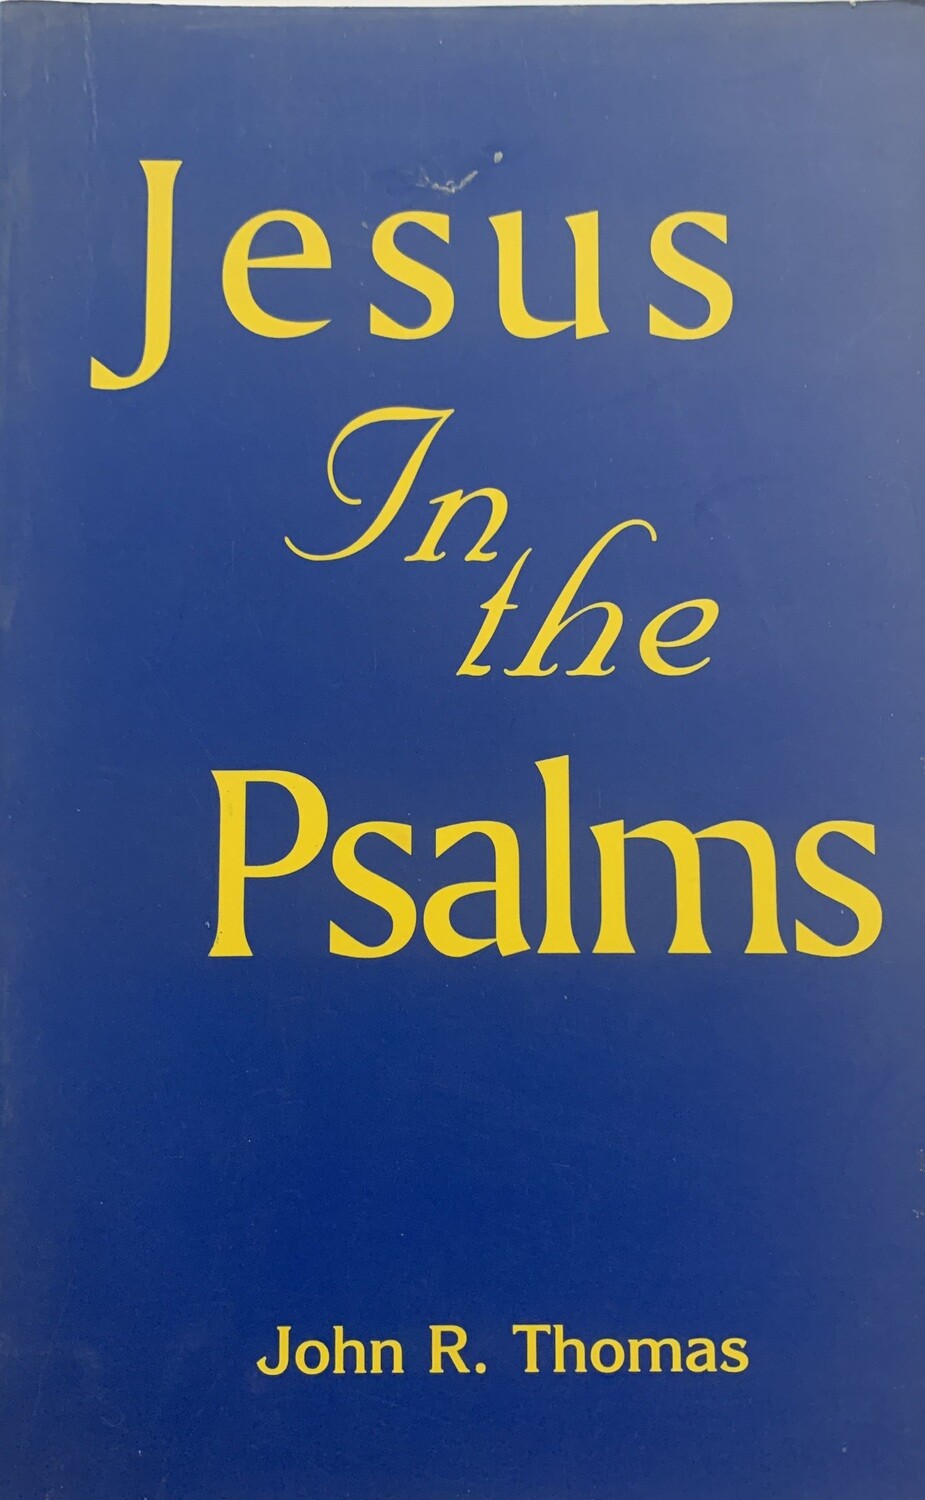 John R Thomas - Jesus In the Psalms